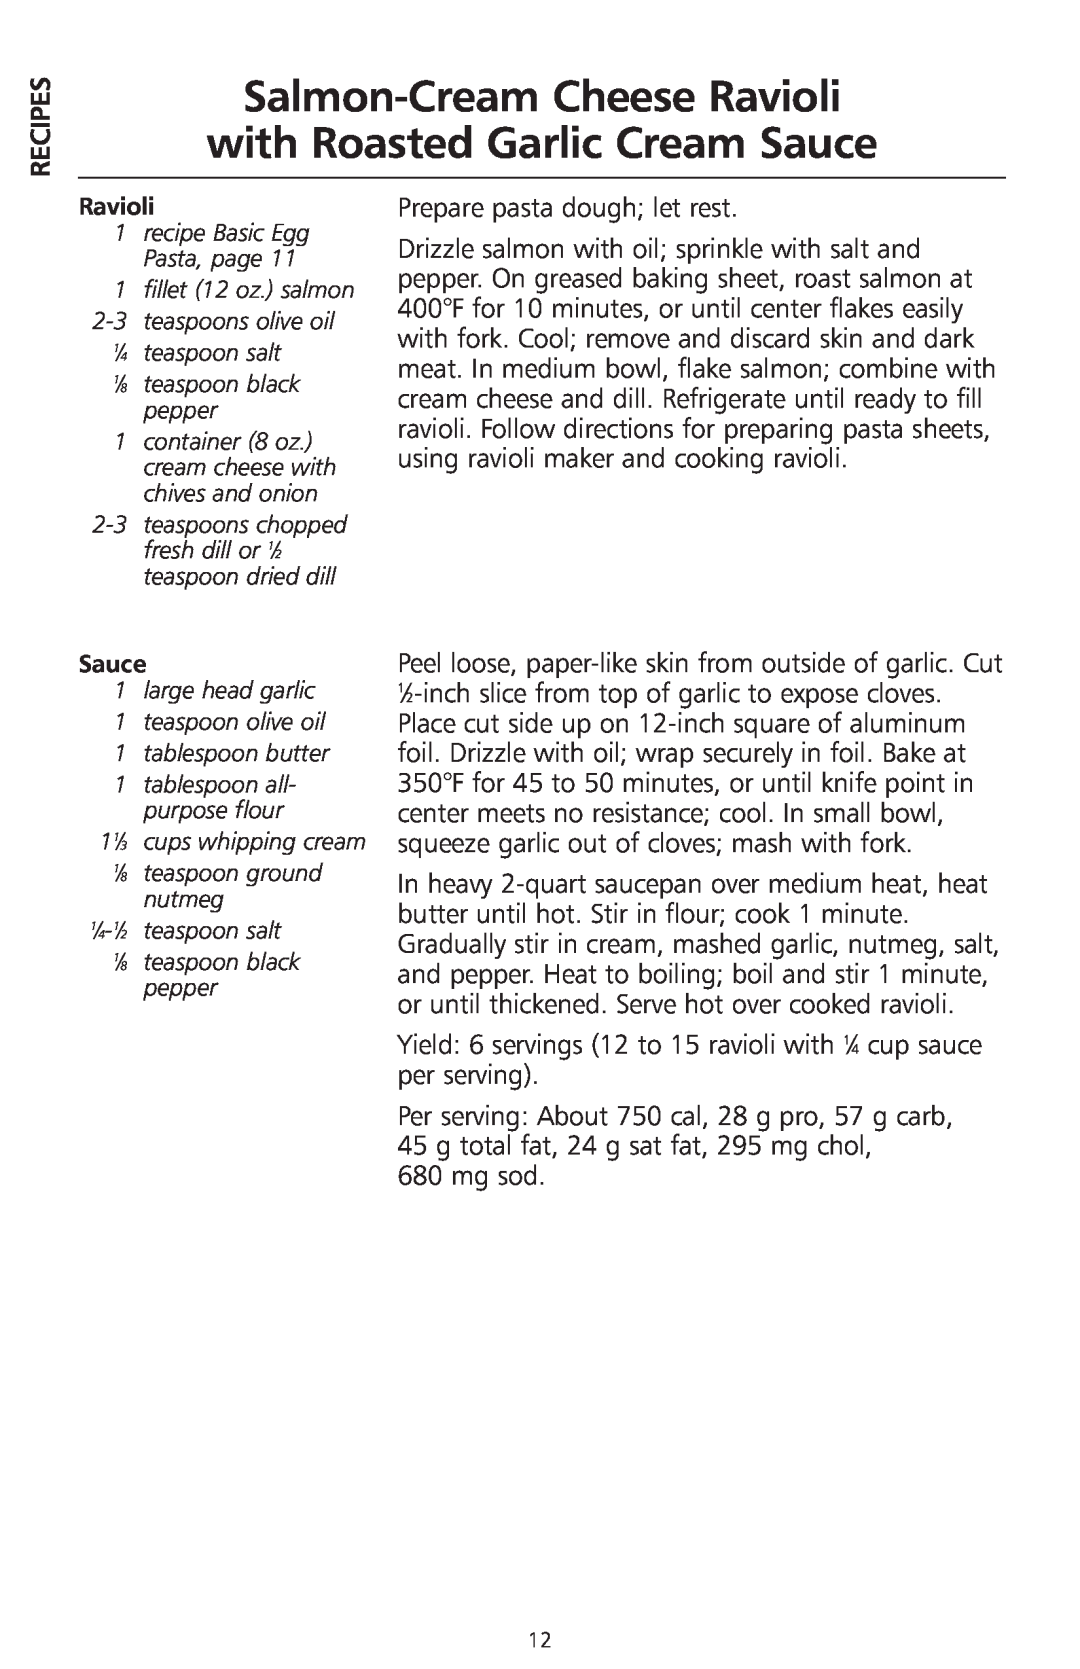 KitchenAid Model KRAV manual Salmon-CreamCheese Ravioli, with Roasted Garlic Cream Sauce, Recipes 